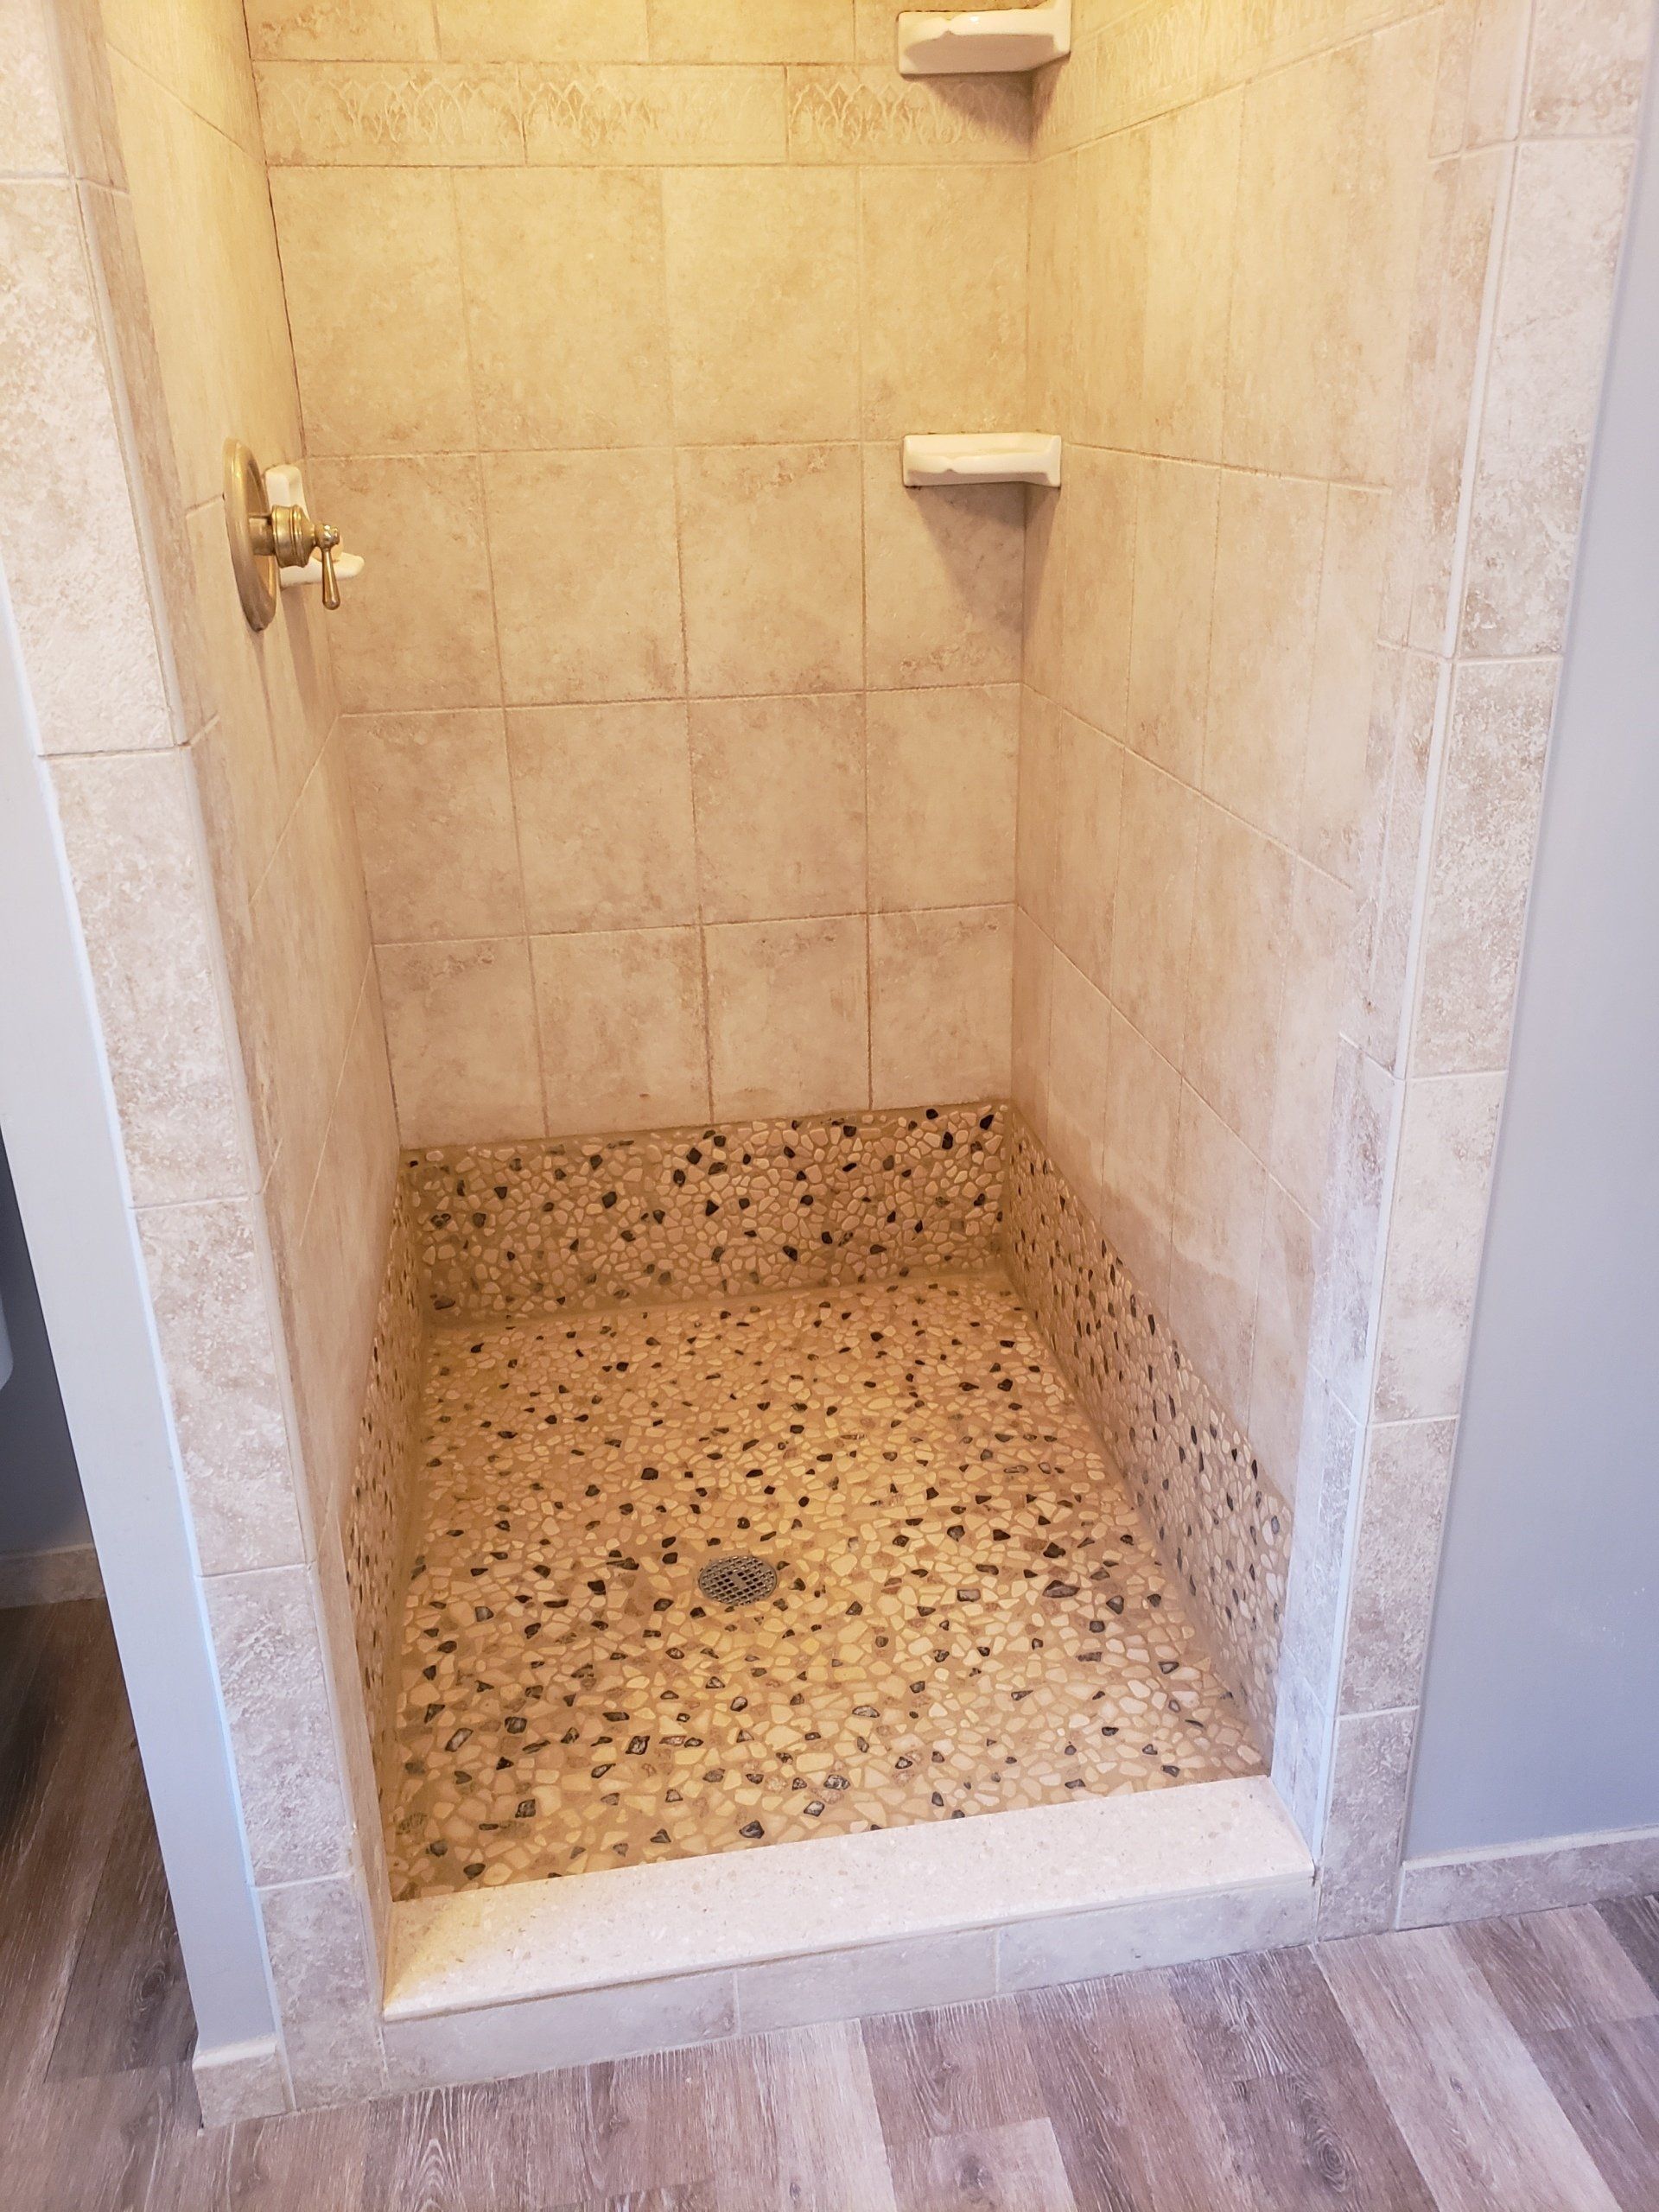 pebble shower floor and tuscan style shower wall tiles in glenside bathroom remodel